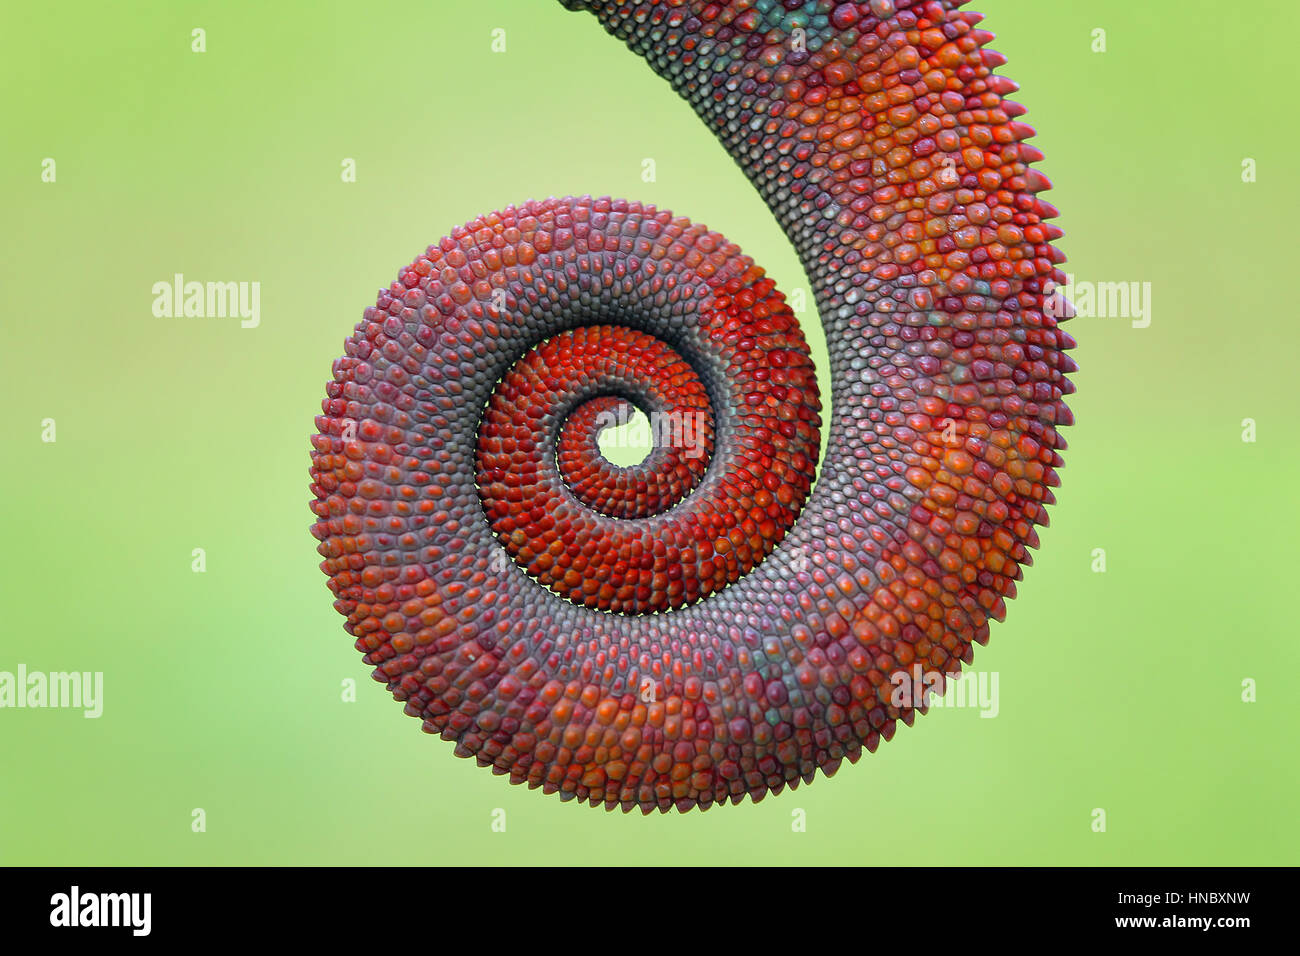 Close-up de un camaleón prensiles, cola Foto de stock